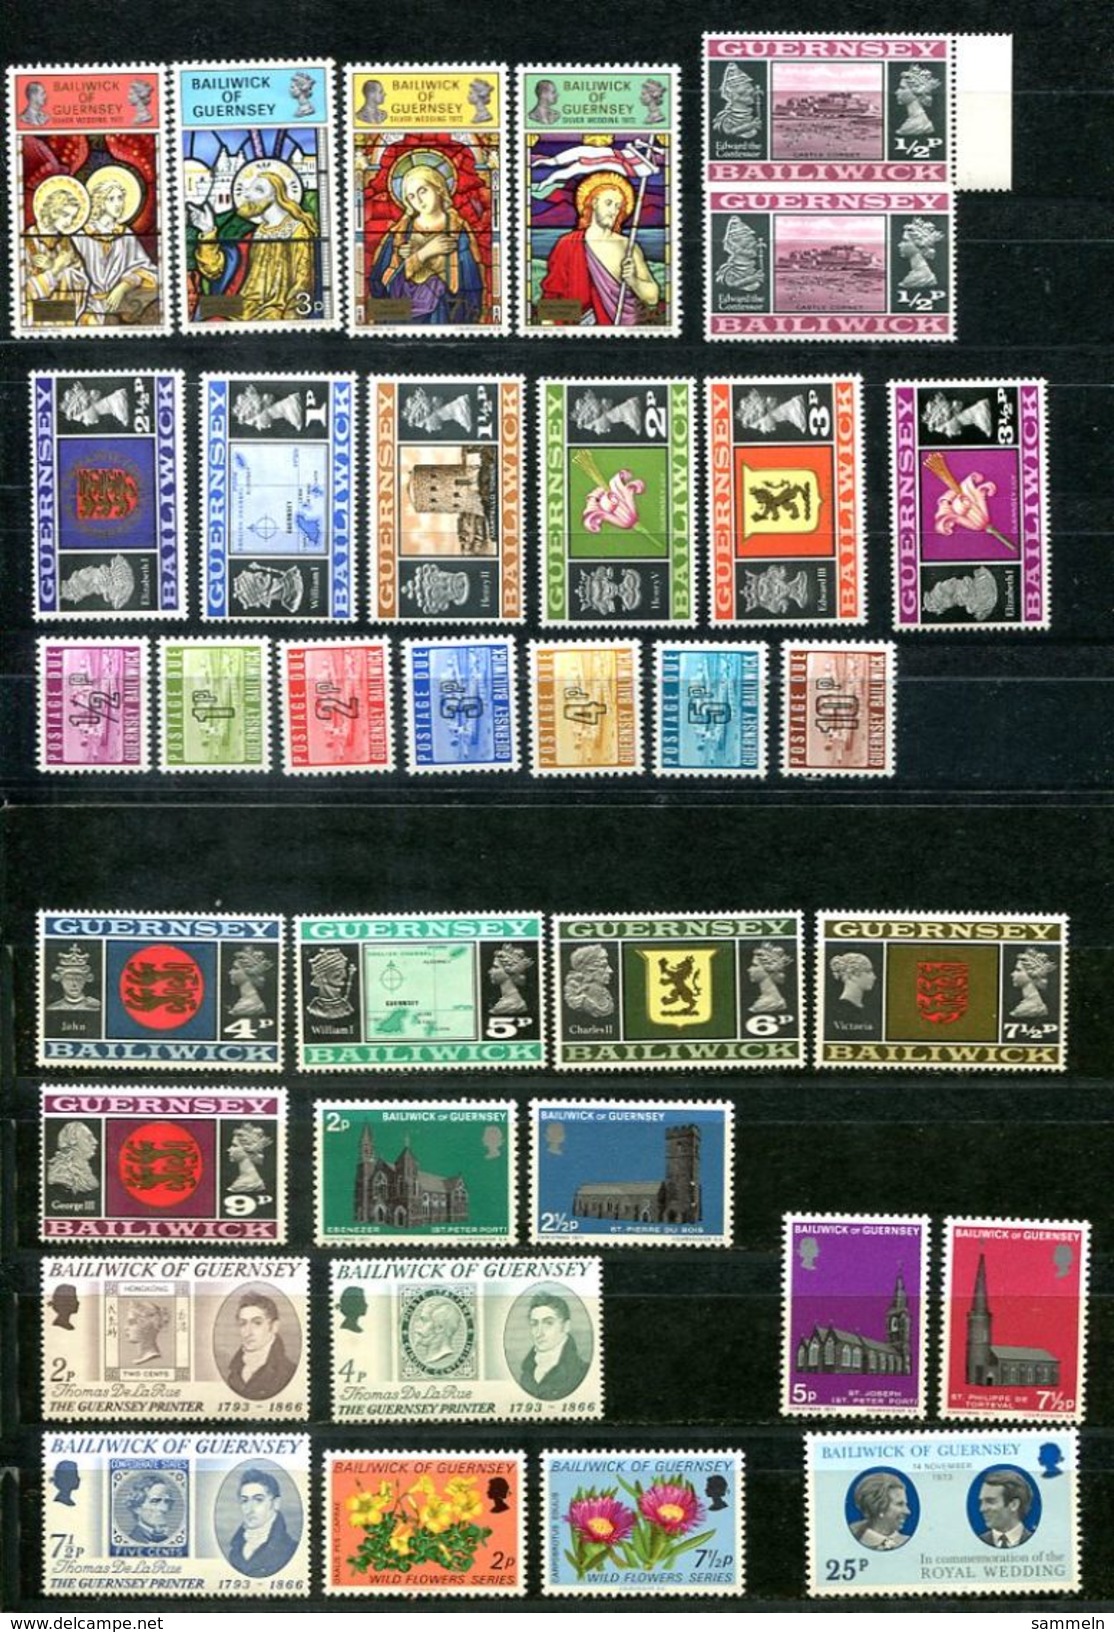 6483 - GUERNSEY - Lot Postfrische Marken - Siehe Scans / Lot Of Mnh Stamps - See Scans - Guernsey